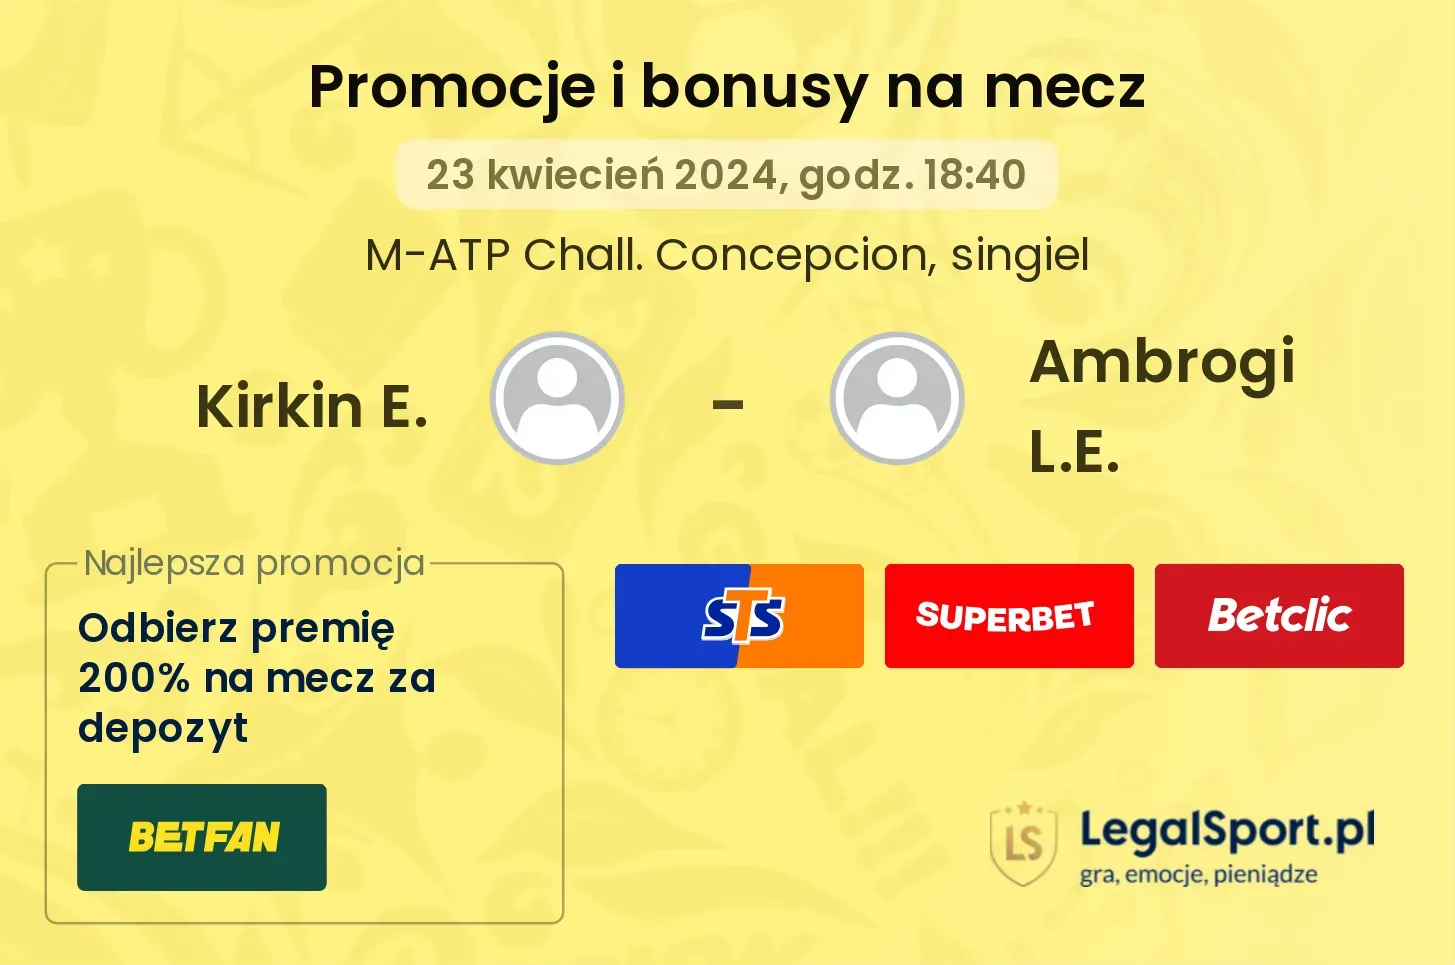 Kirkin E. - Ambrogi L.E. promocje bonusy na mecz